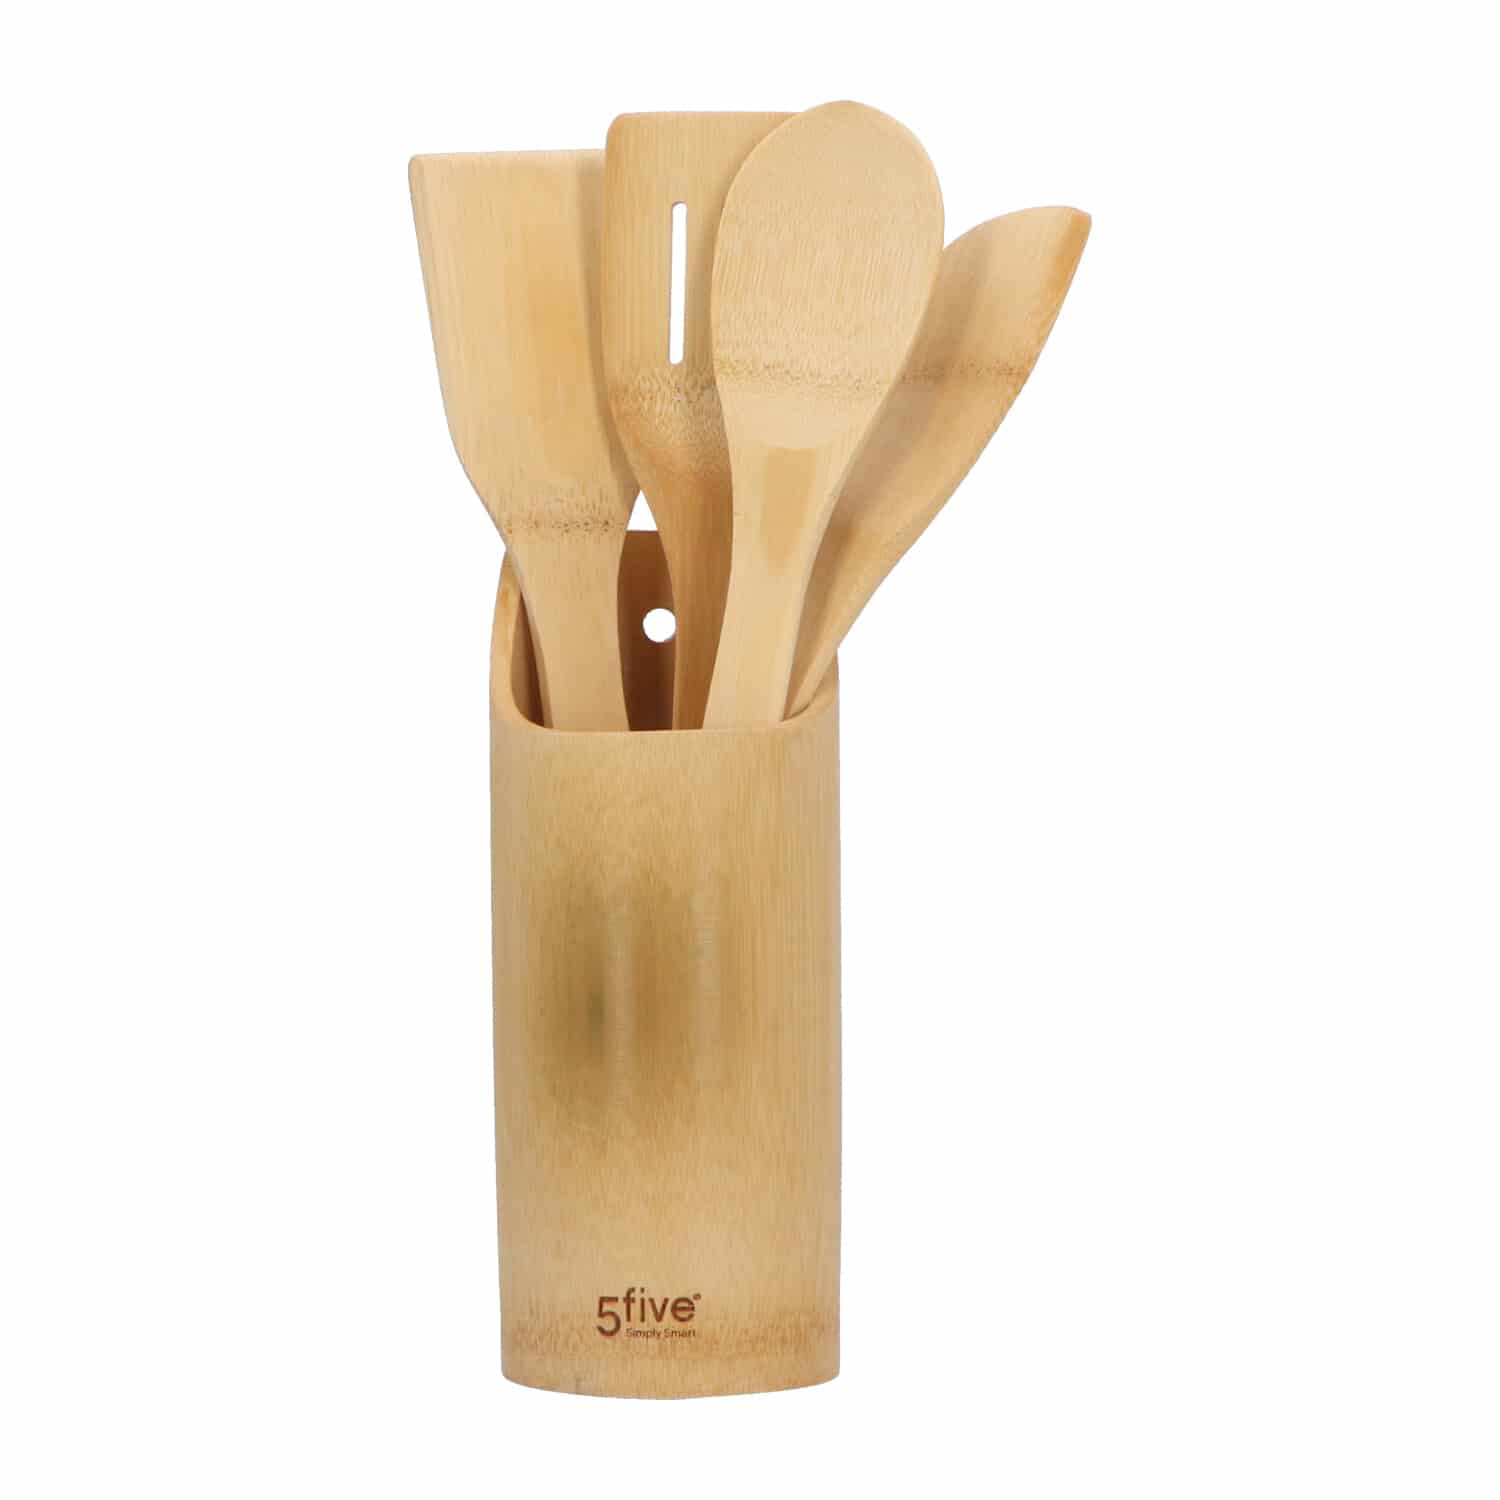 4goodz 5-delige Bamboe Spatel- en Pollepel set in houder - 9x32cm